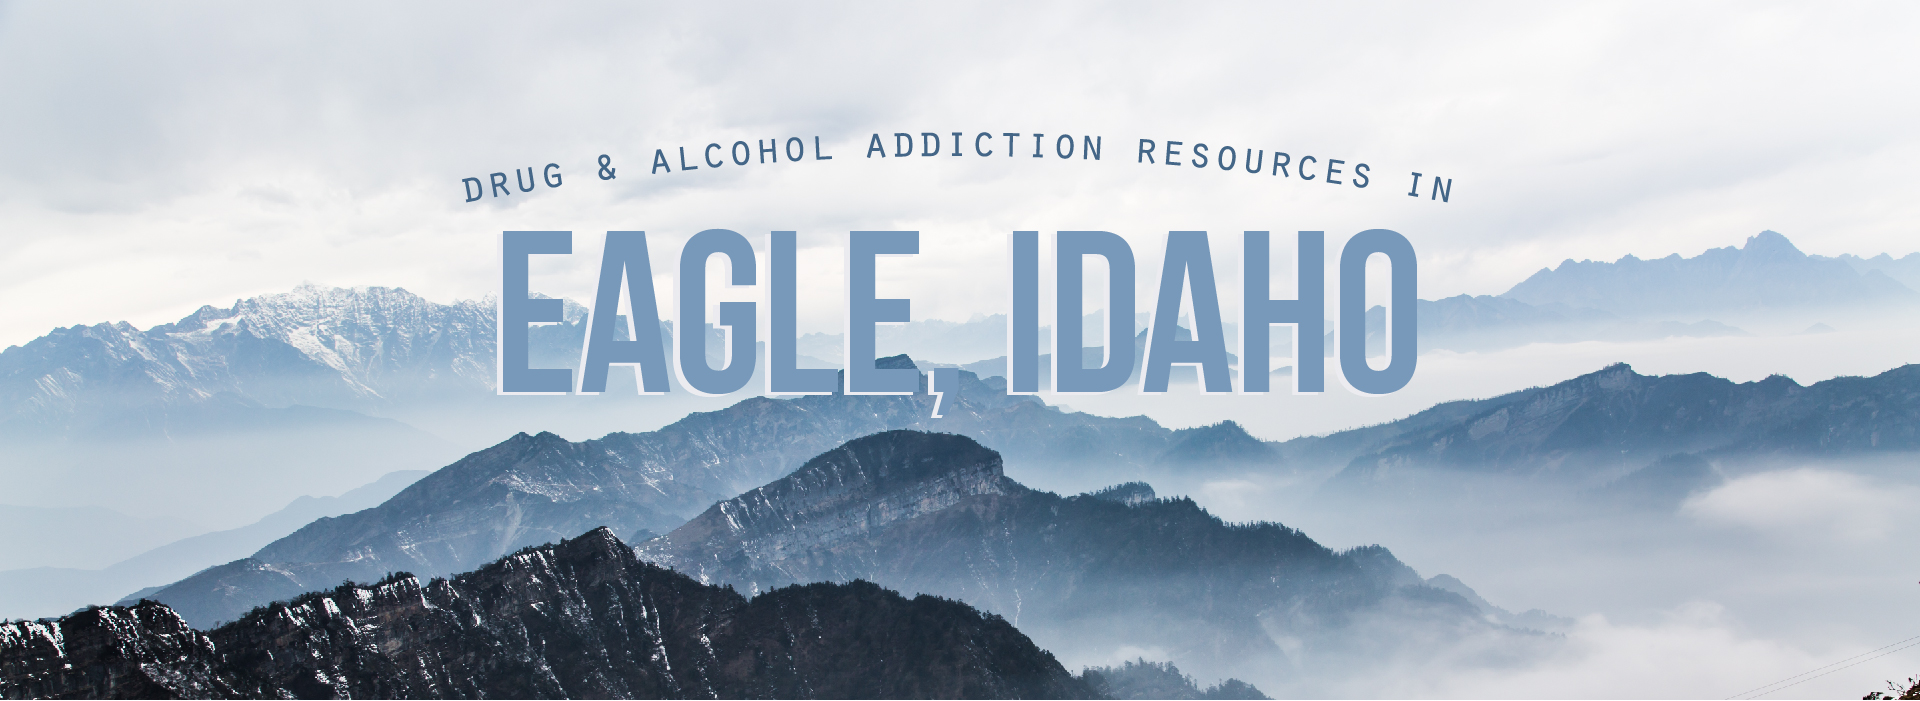 Eagle, Idaho addiction resources